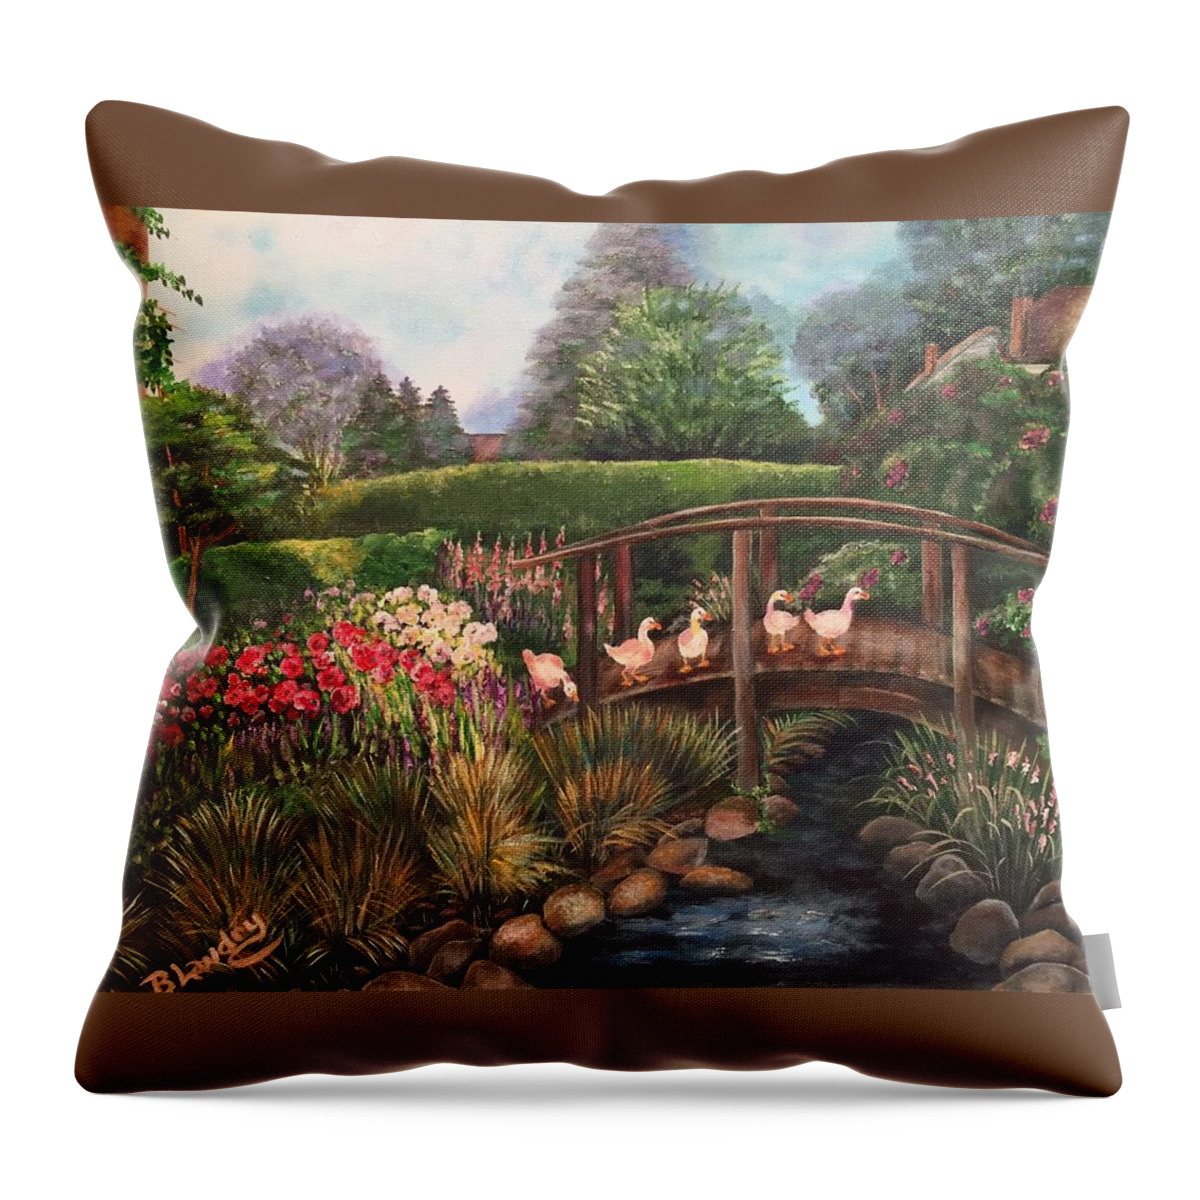 Garden Throw Pillow featuring the painting The Garden Bridge by Barbara Landry